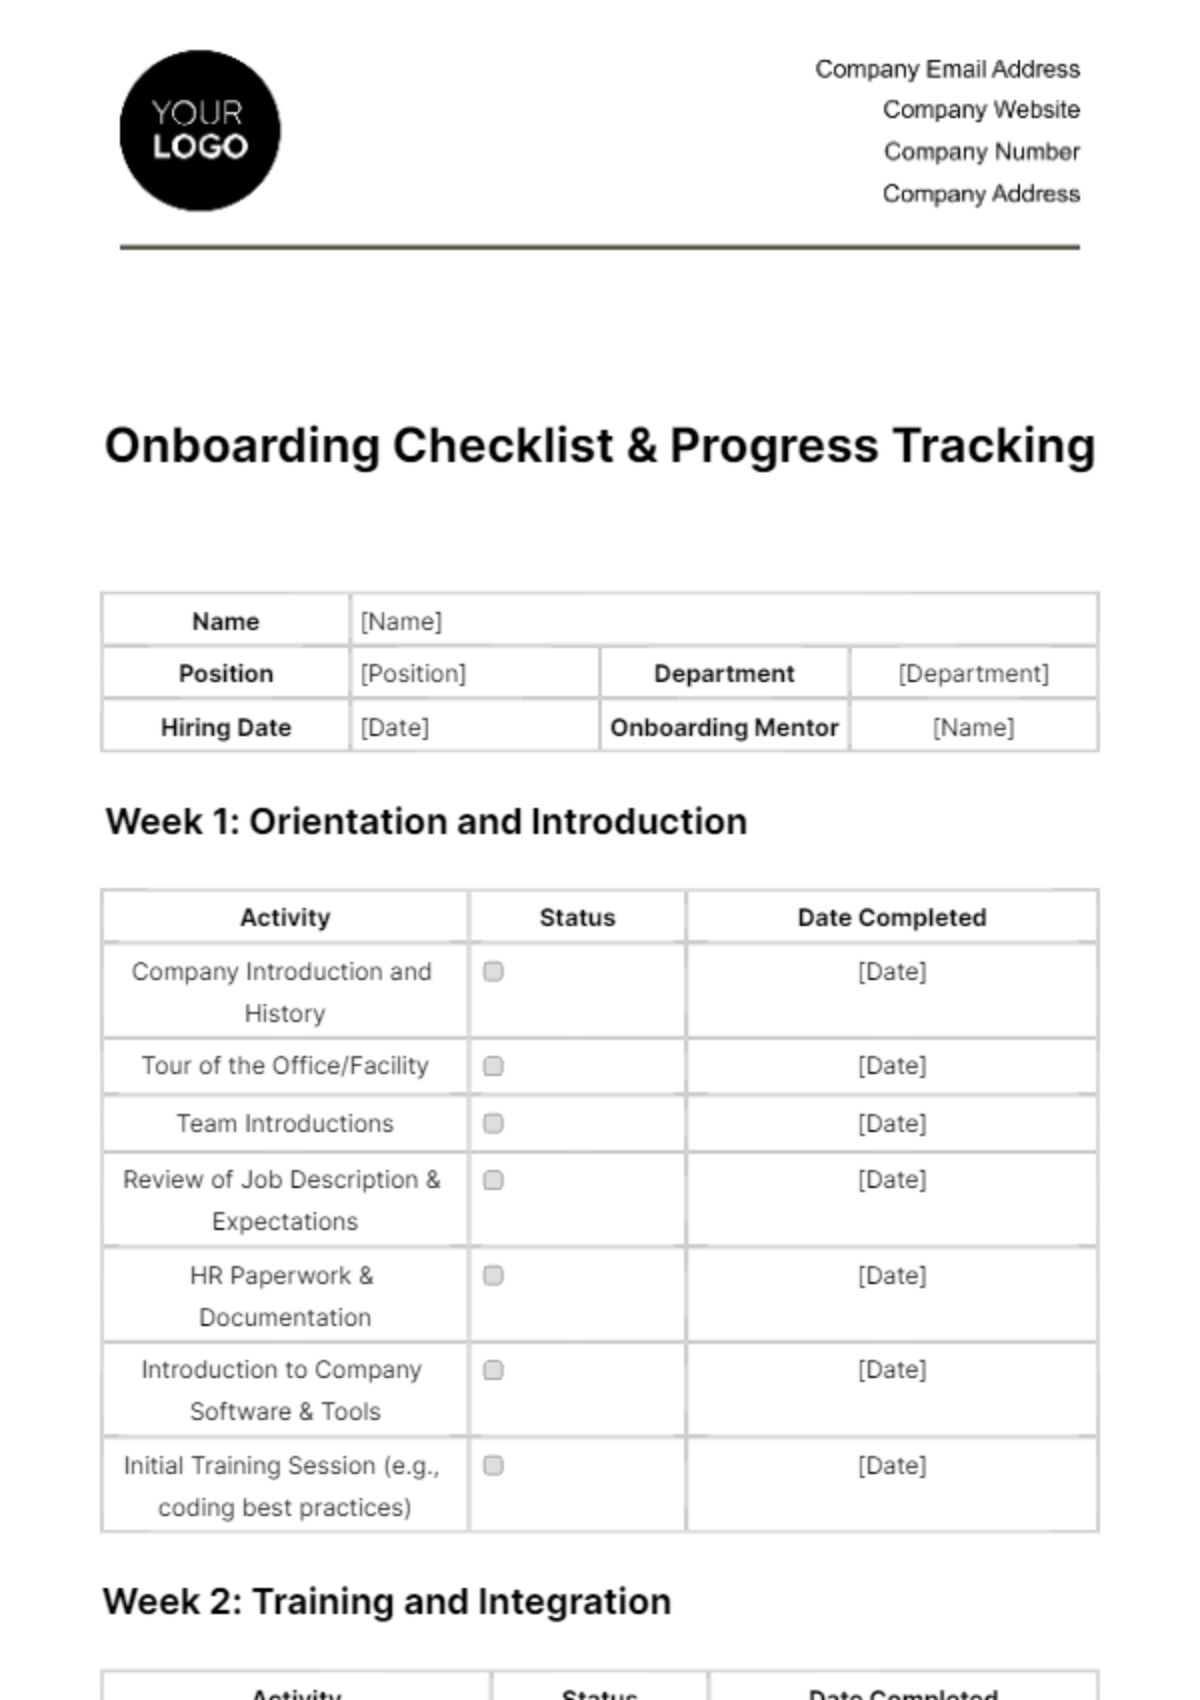 Free Onboarding Checklist & Progress Tracking HR Template